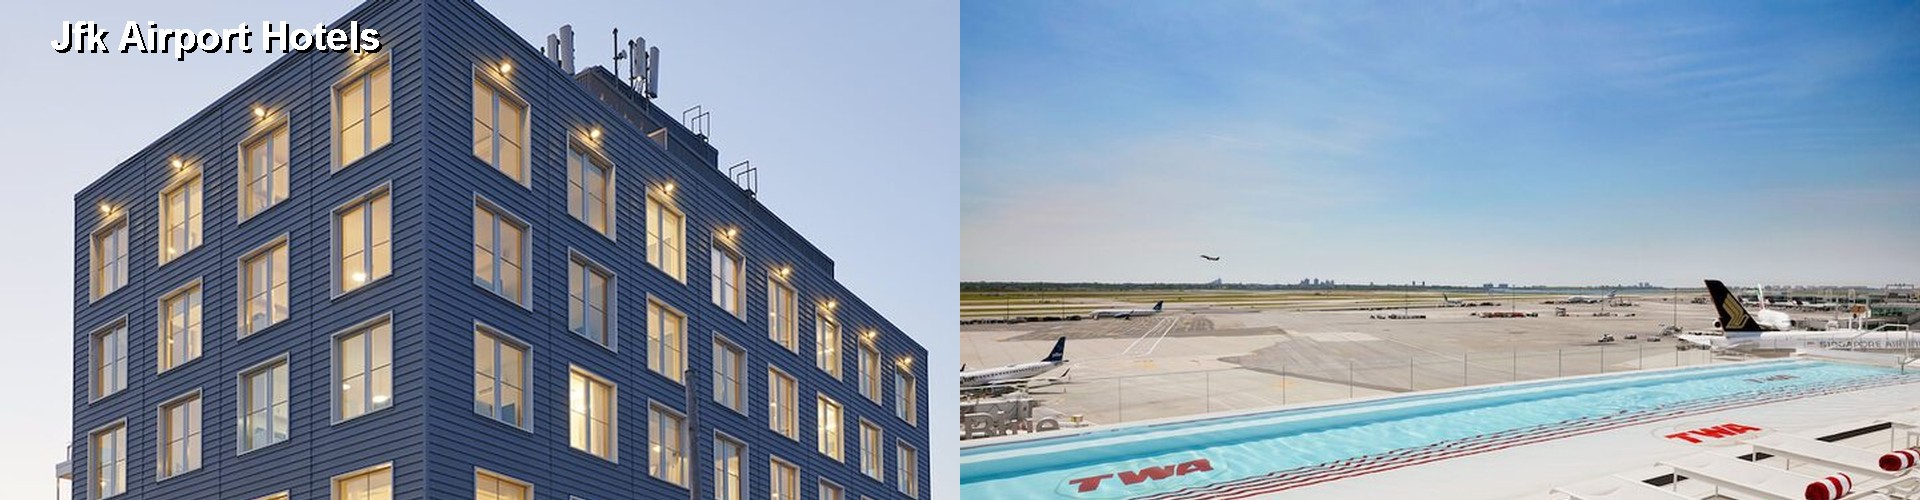 5 Best Hotels near Jfk Airport